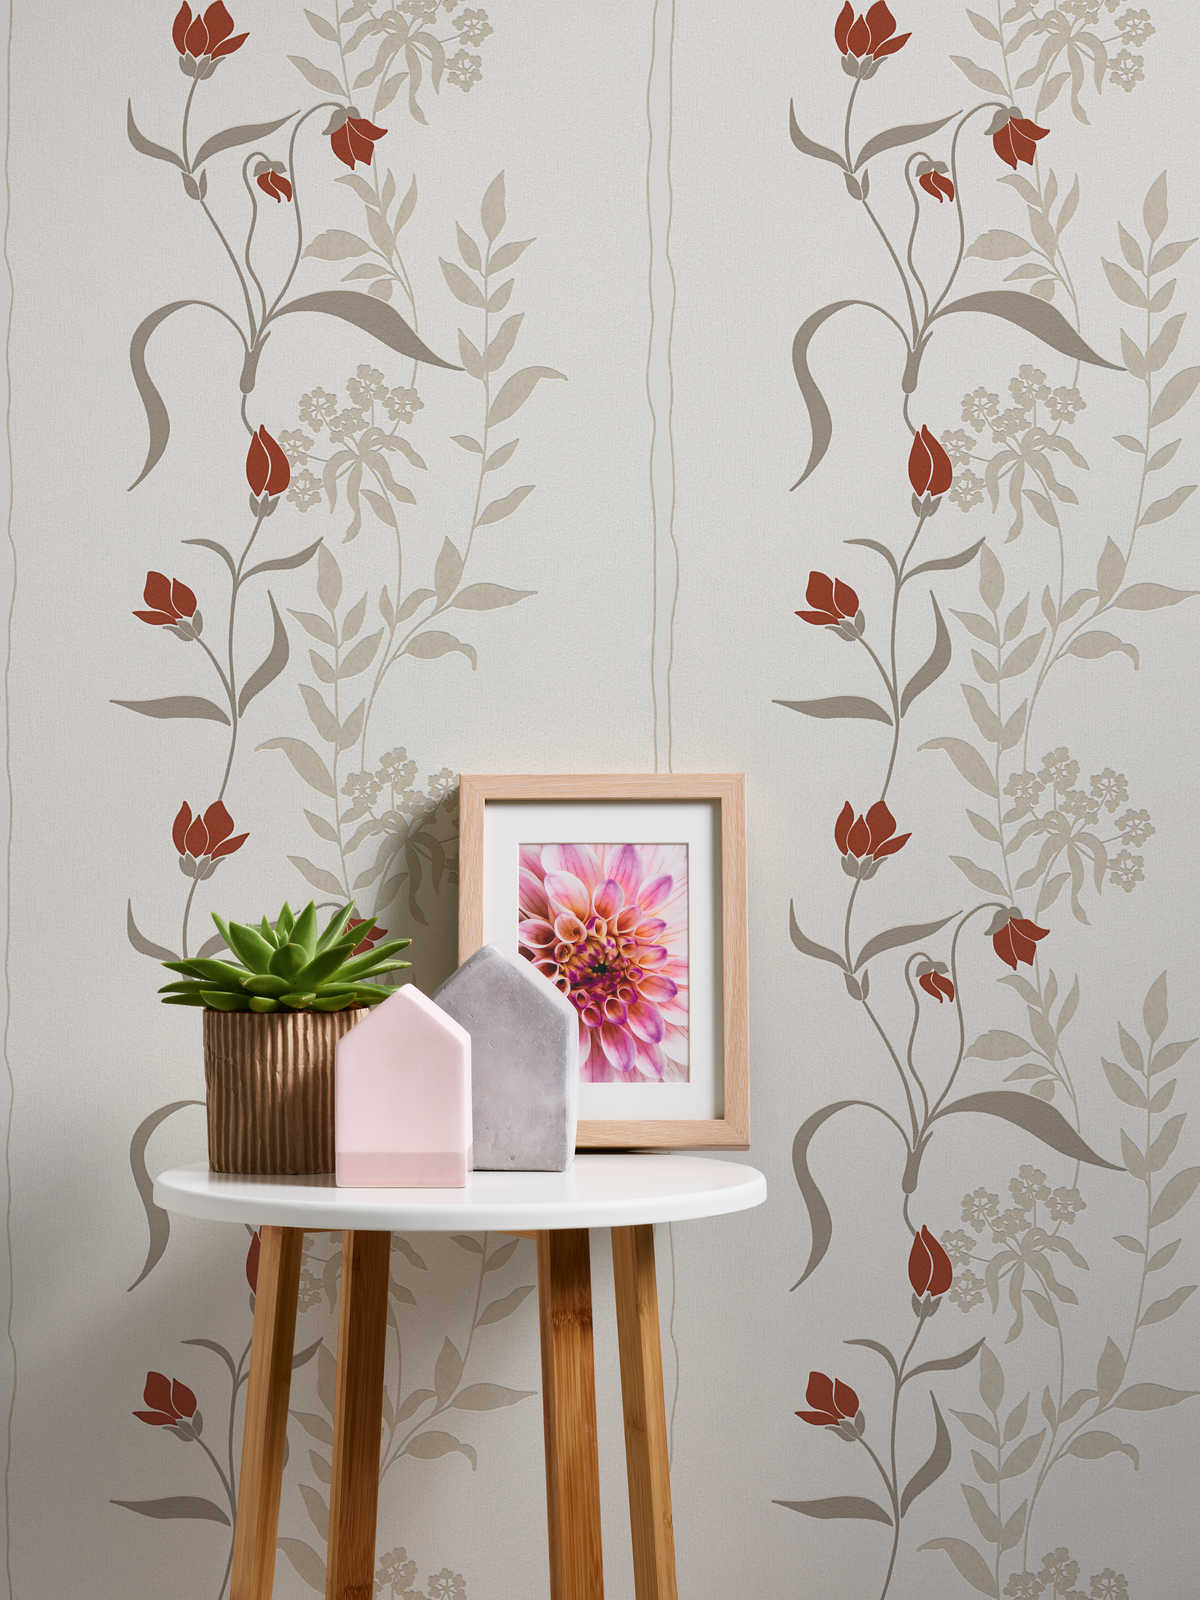             Living room wallpaper with flowers vines - beige, brown, red
        